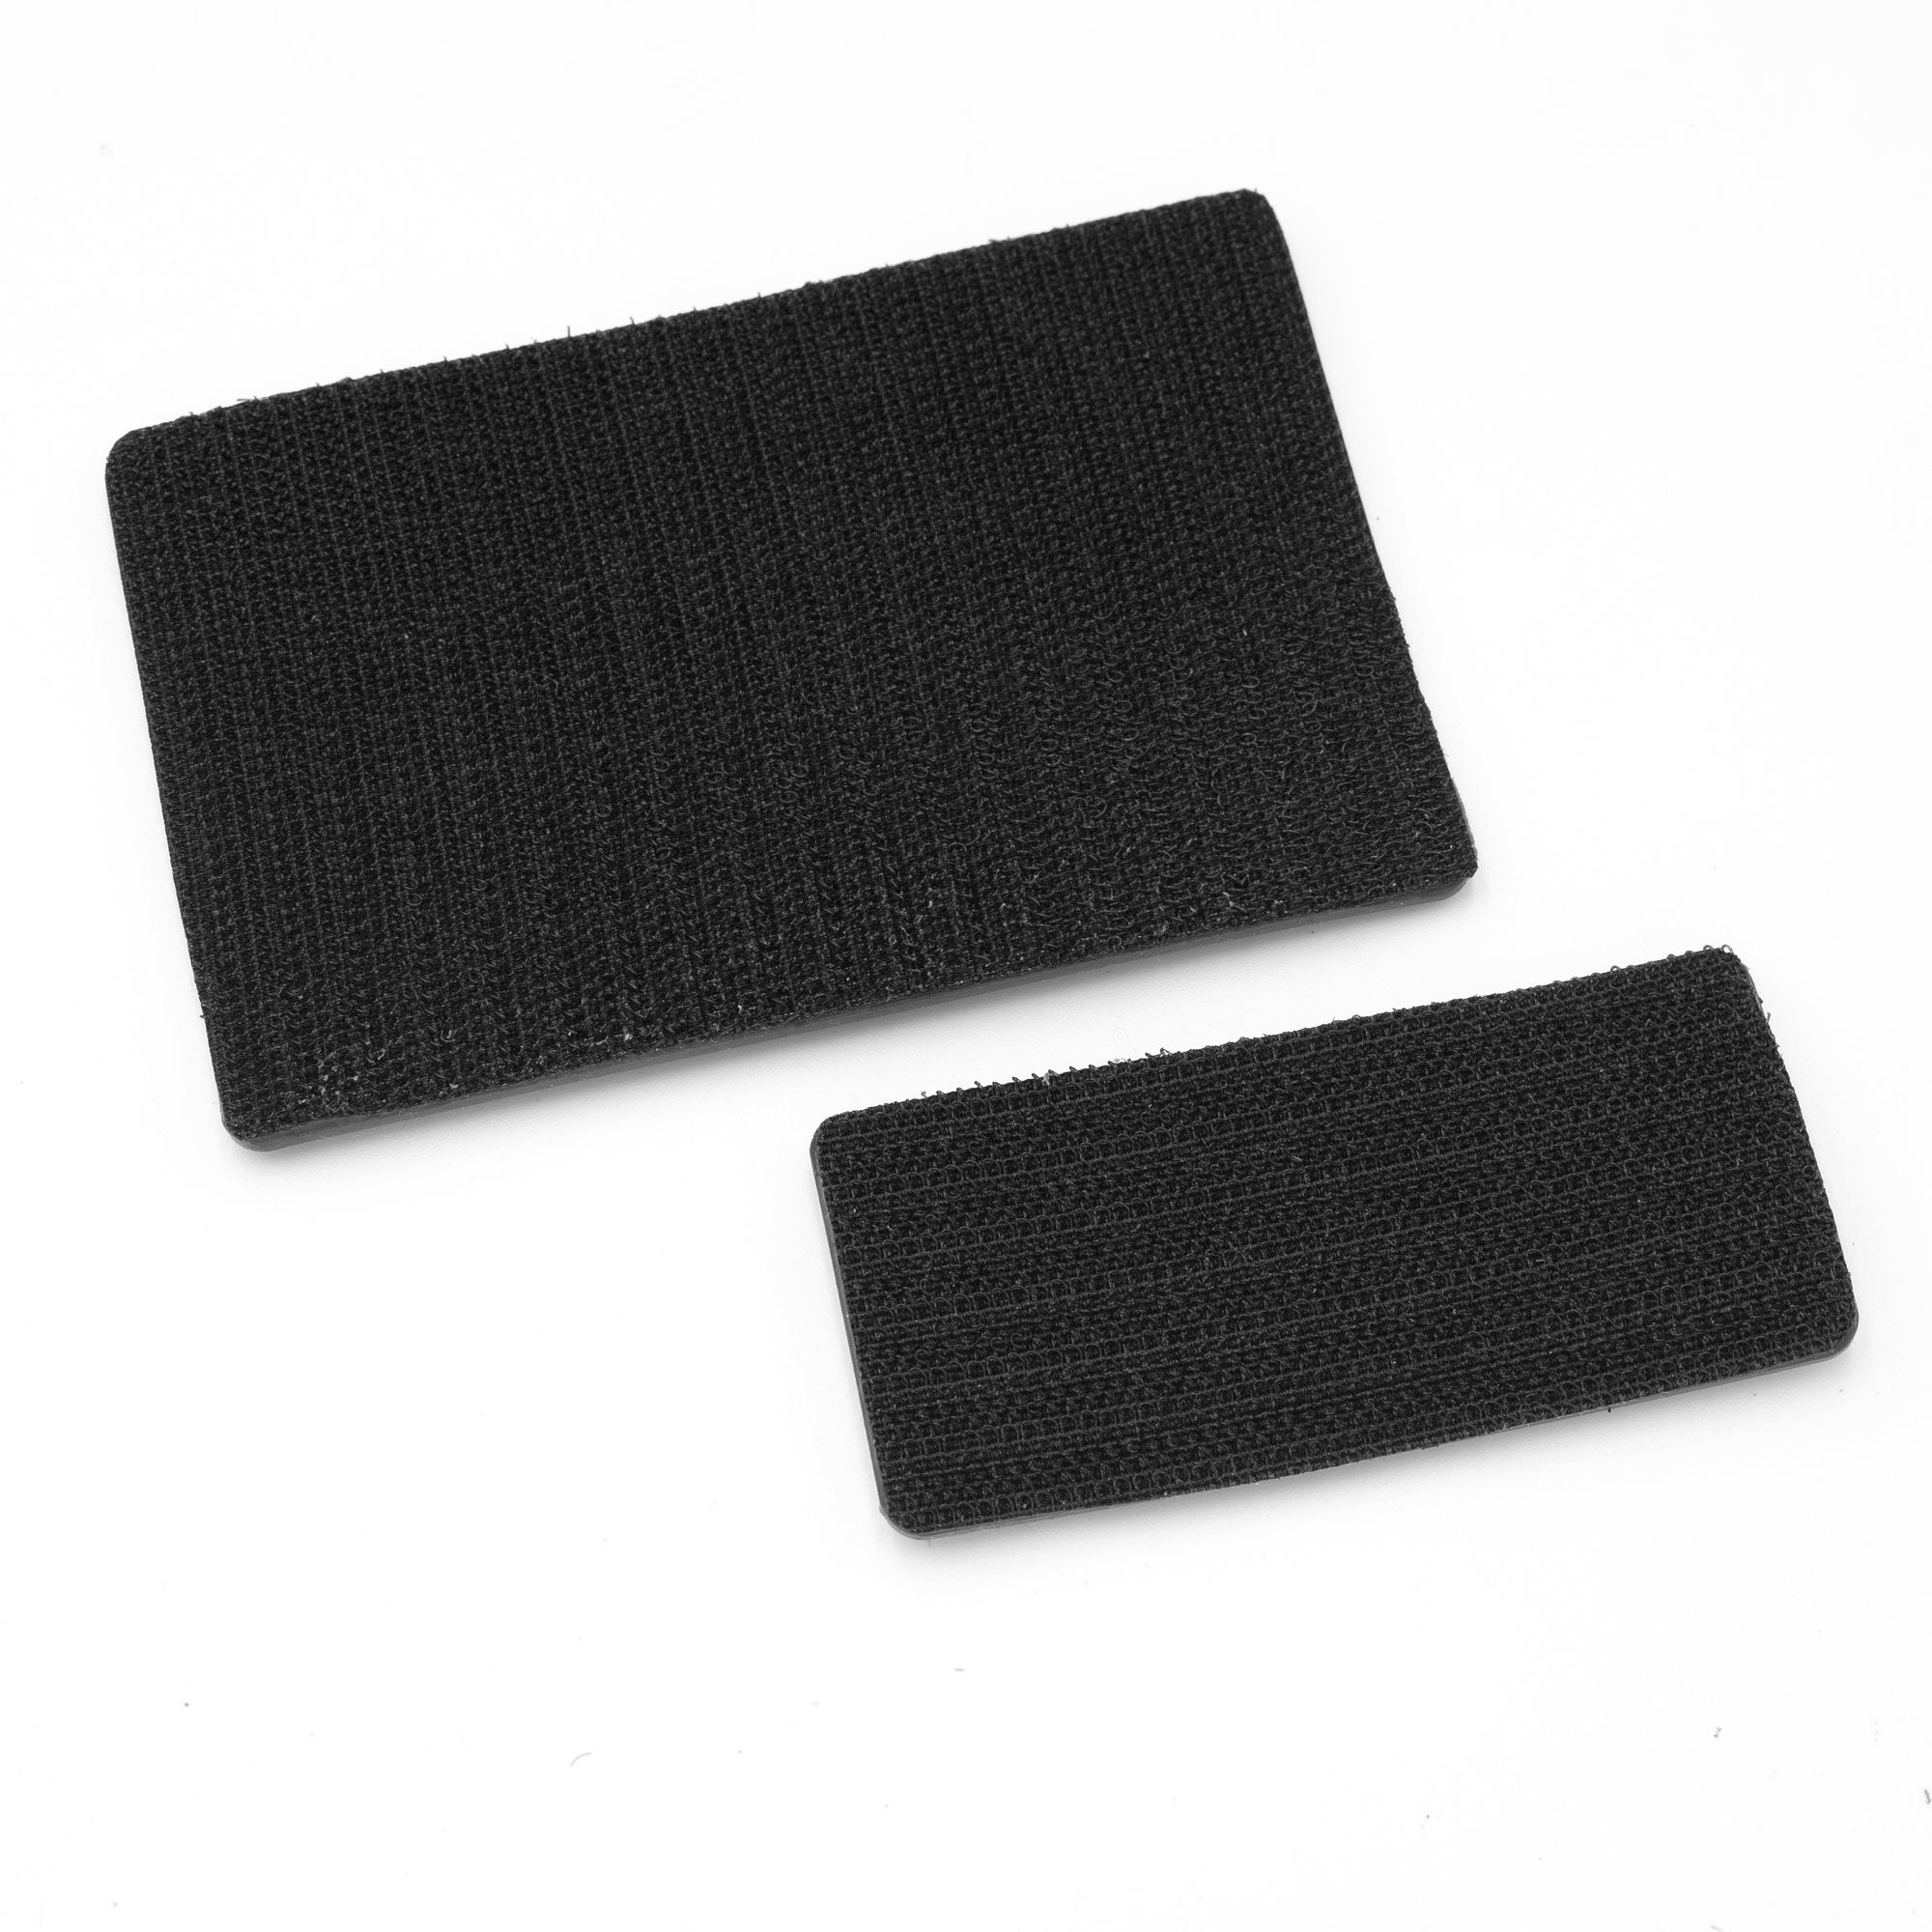 Tim Montressor #TM40 Forever Rubber Velcro Patch - 2 Pack - Black